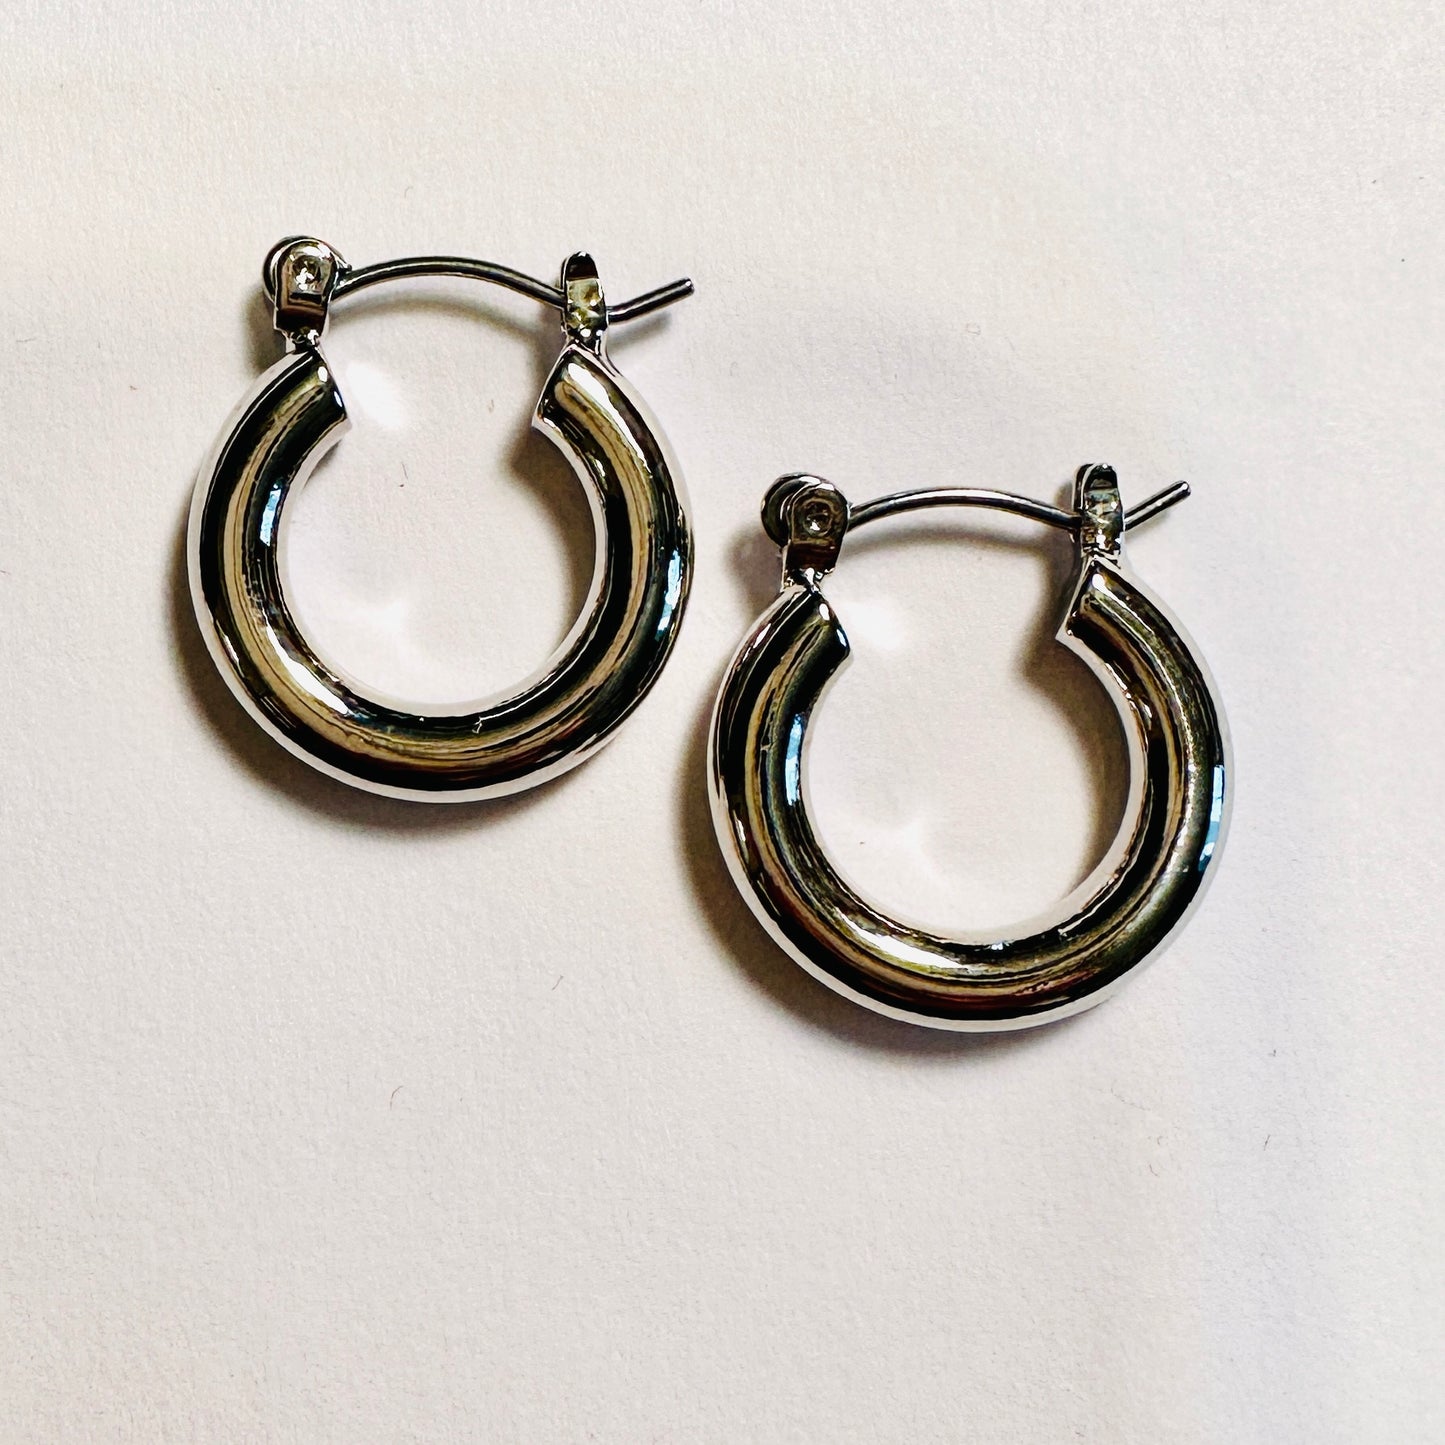 Small Silver Hoop Earrings